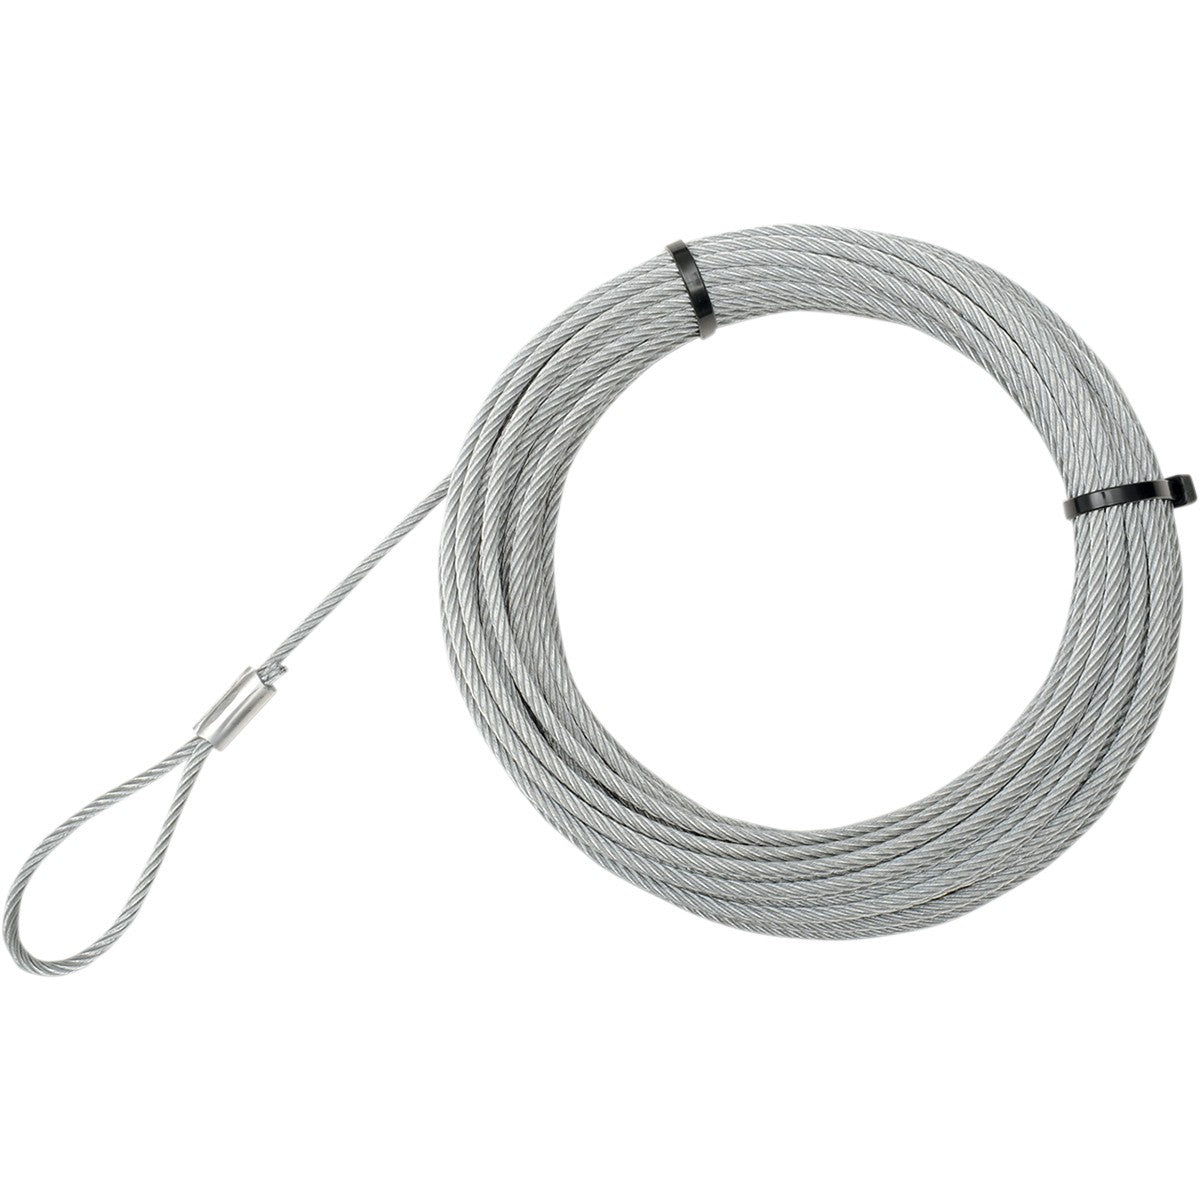 Warn Vantage 2000-lb Replacement Wire Rope - PeakBoys